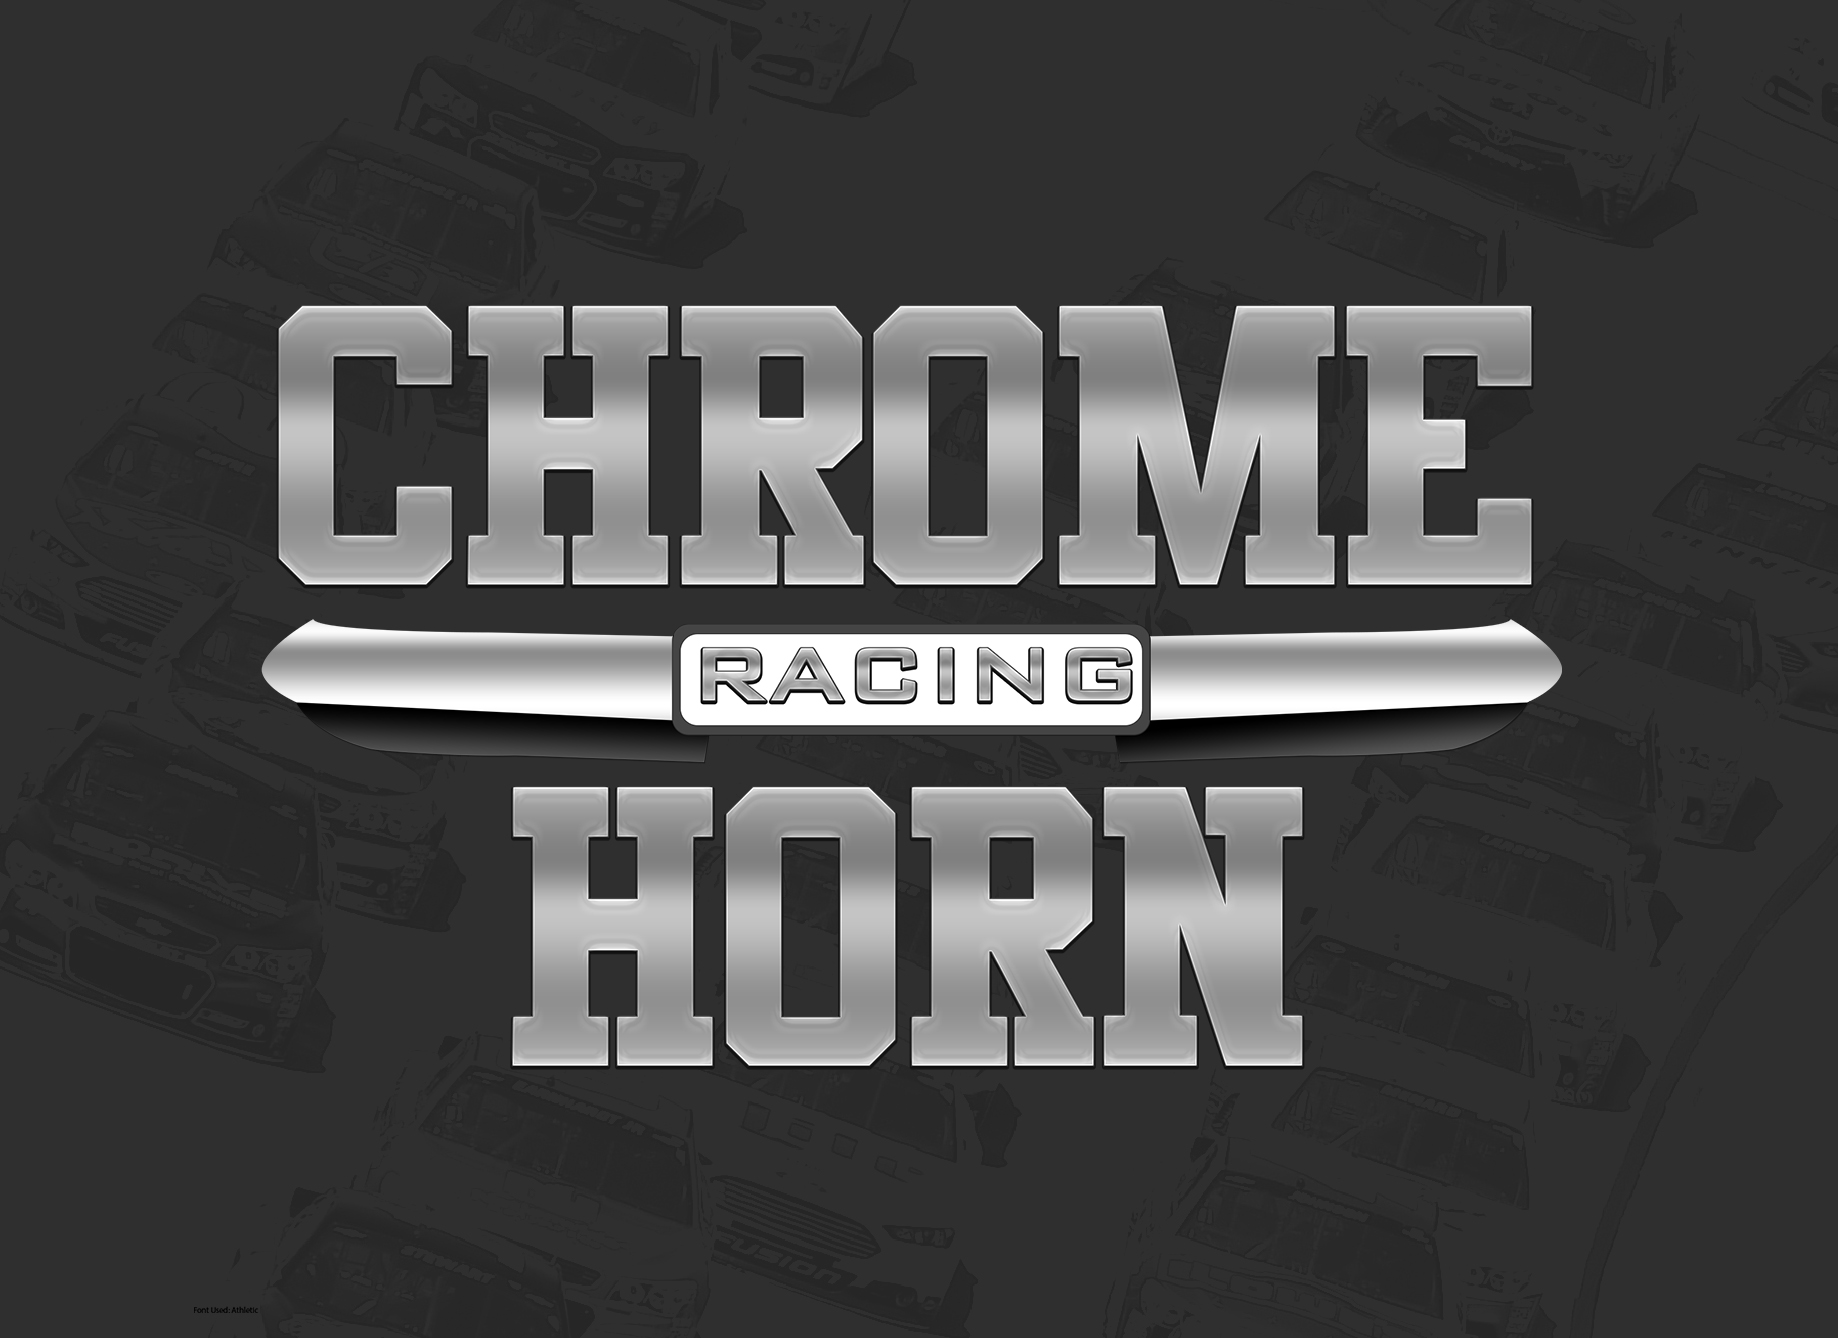 chromehorn-racing_logo.jpg